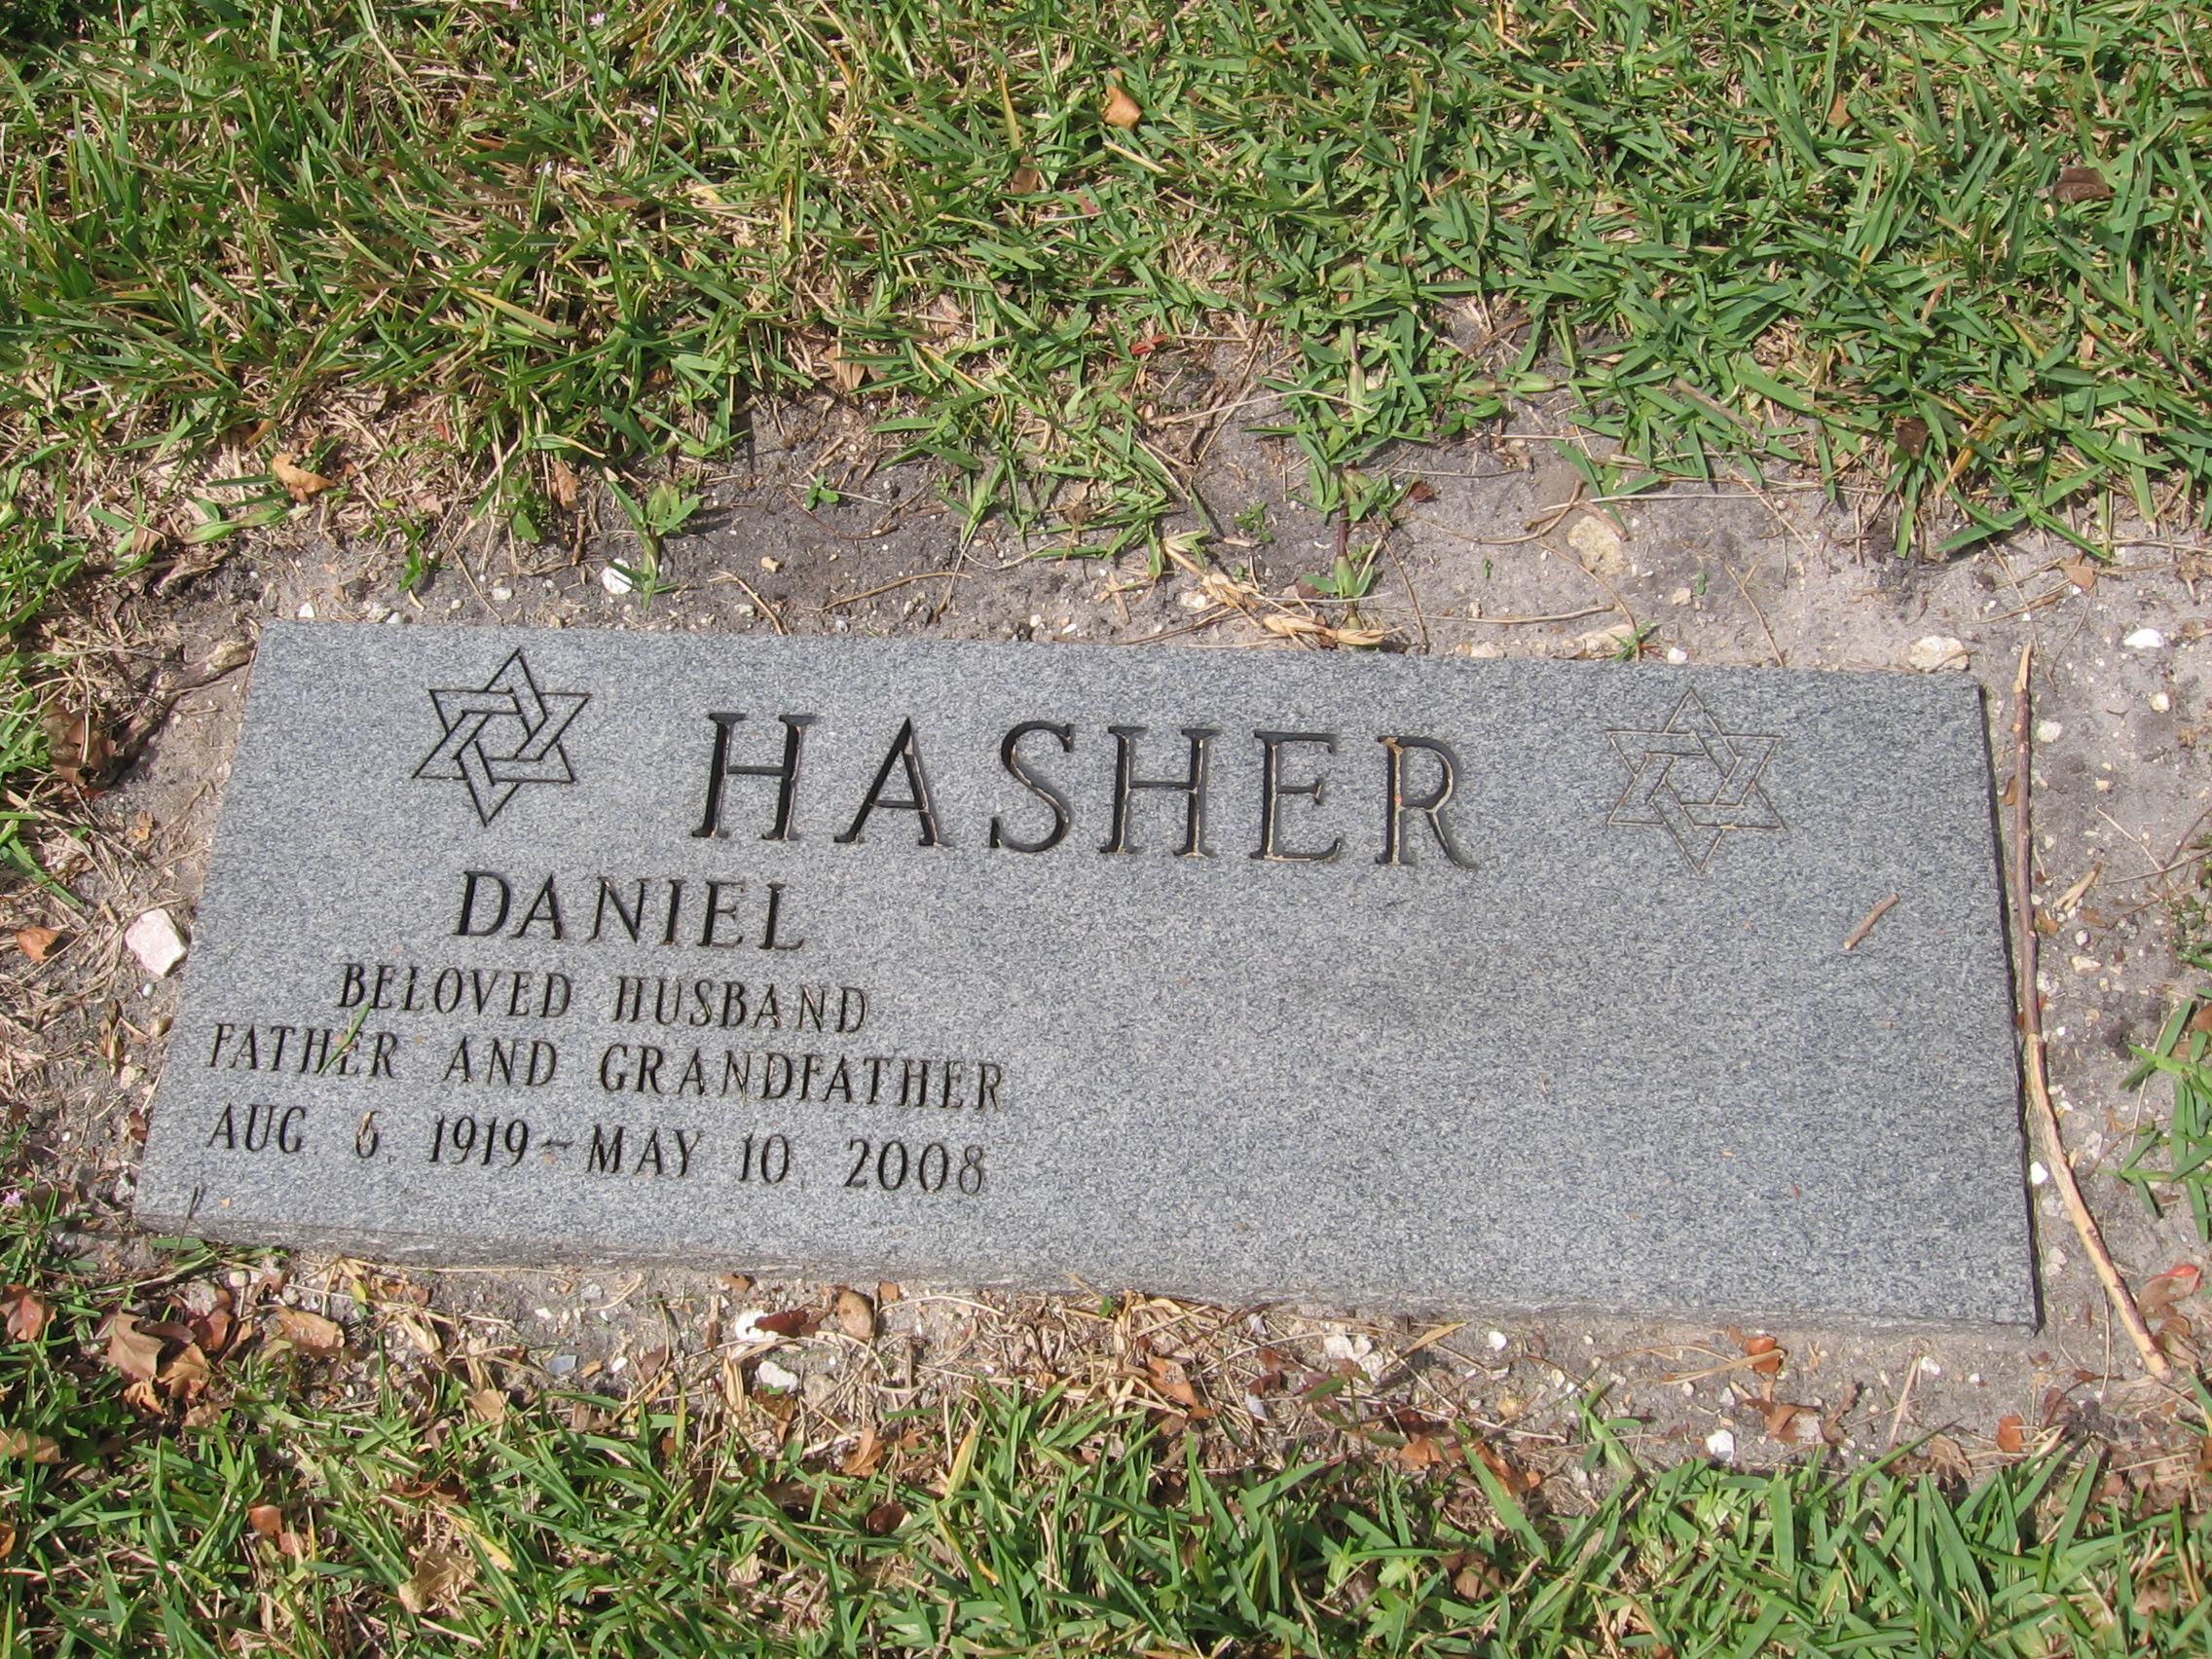 Daniel Hasher